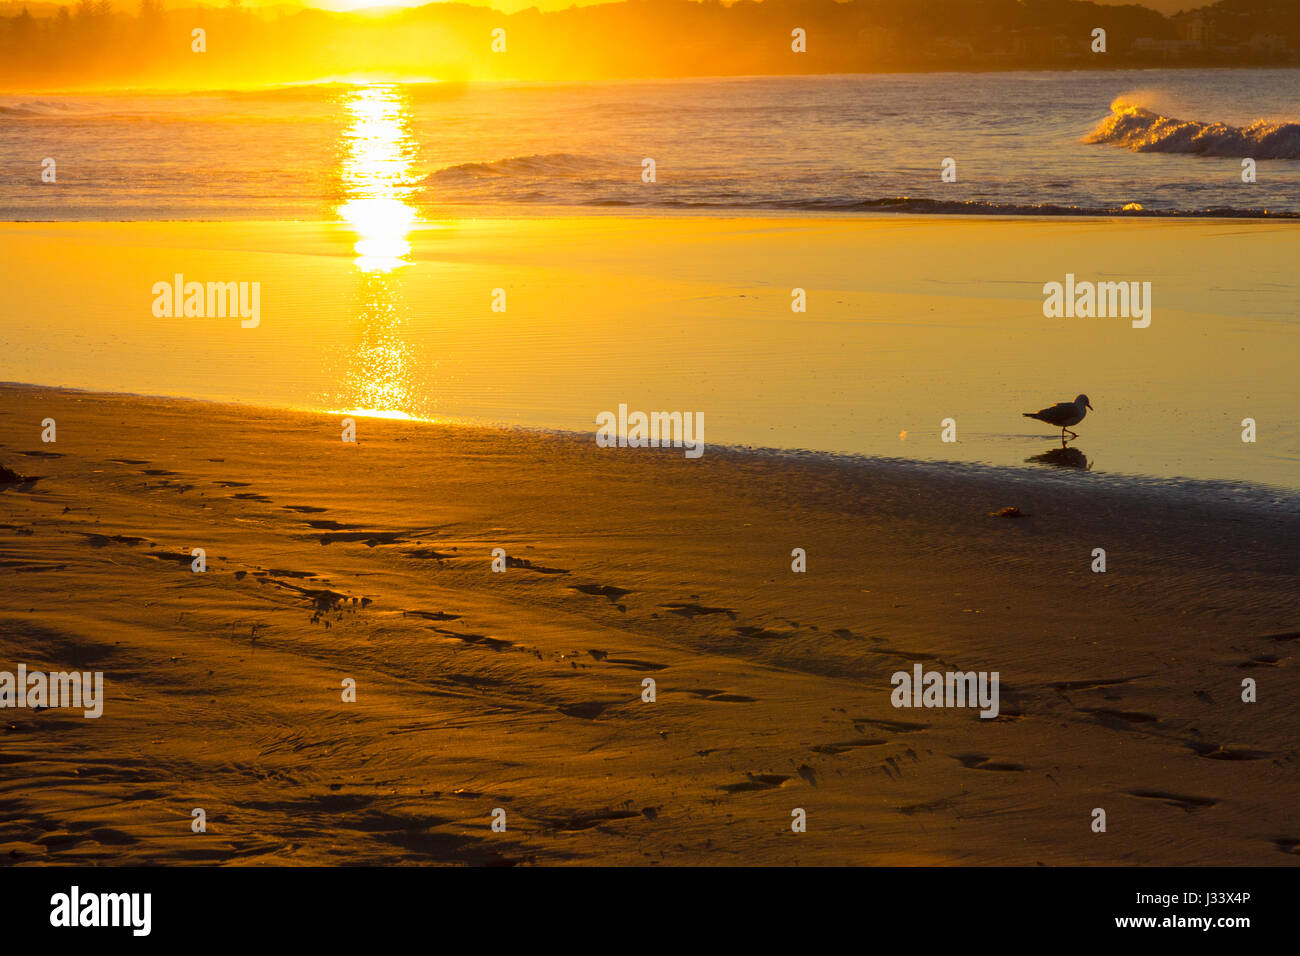 Bird wading in the sea at sunset on Coolangatta beach, Gold Coast, Queensland, Australia Stock Photo